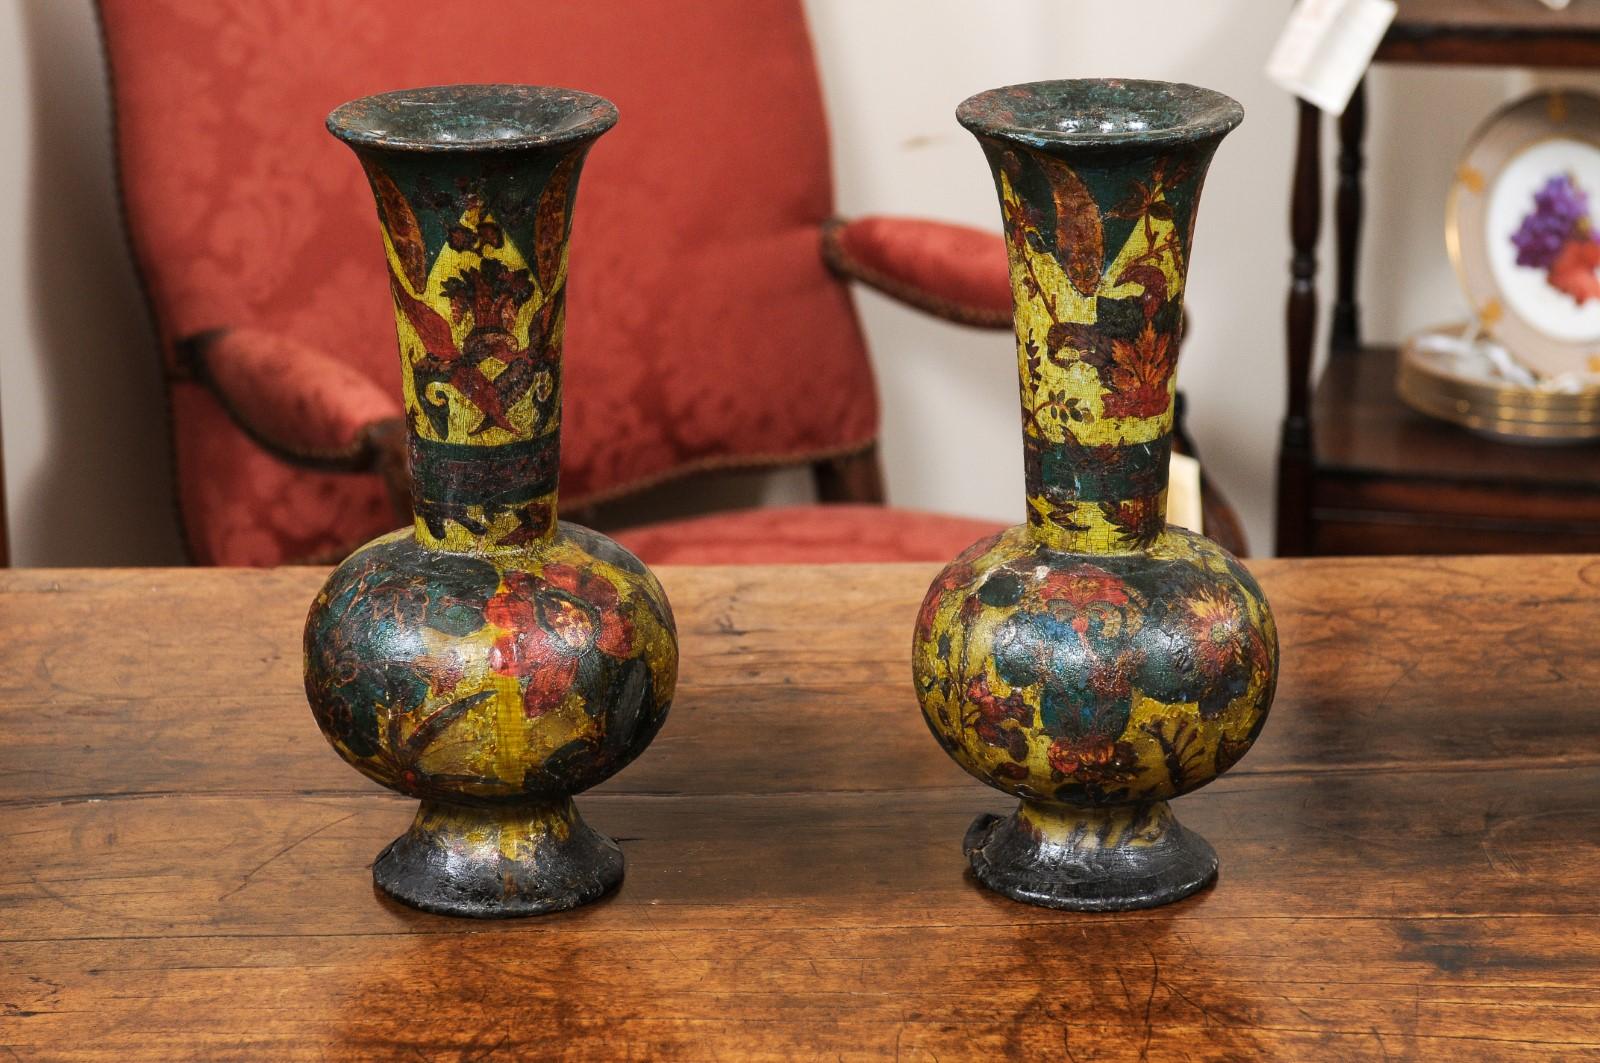  Pair of Italian Decoupage Wood Vases, 19th Century In Good Condition For Sale In Atlanta, GA